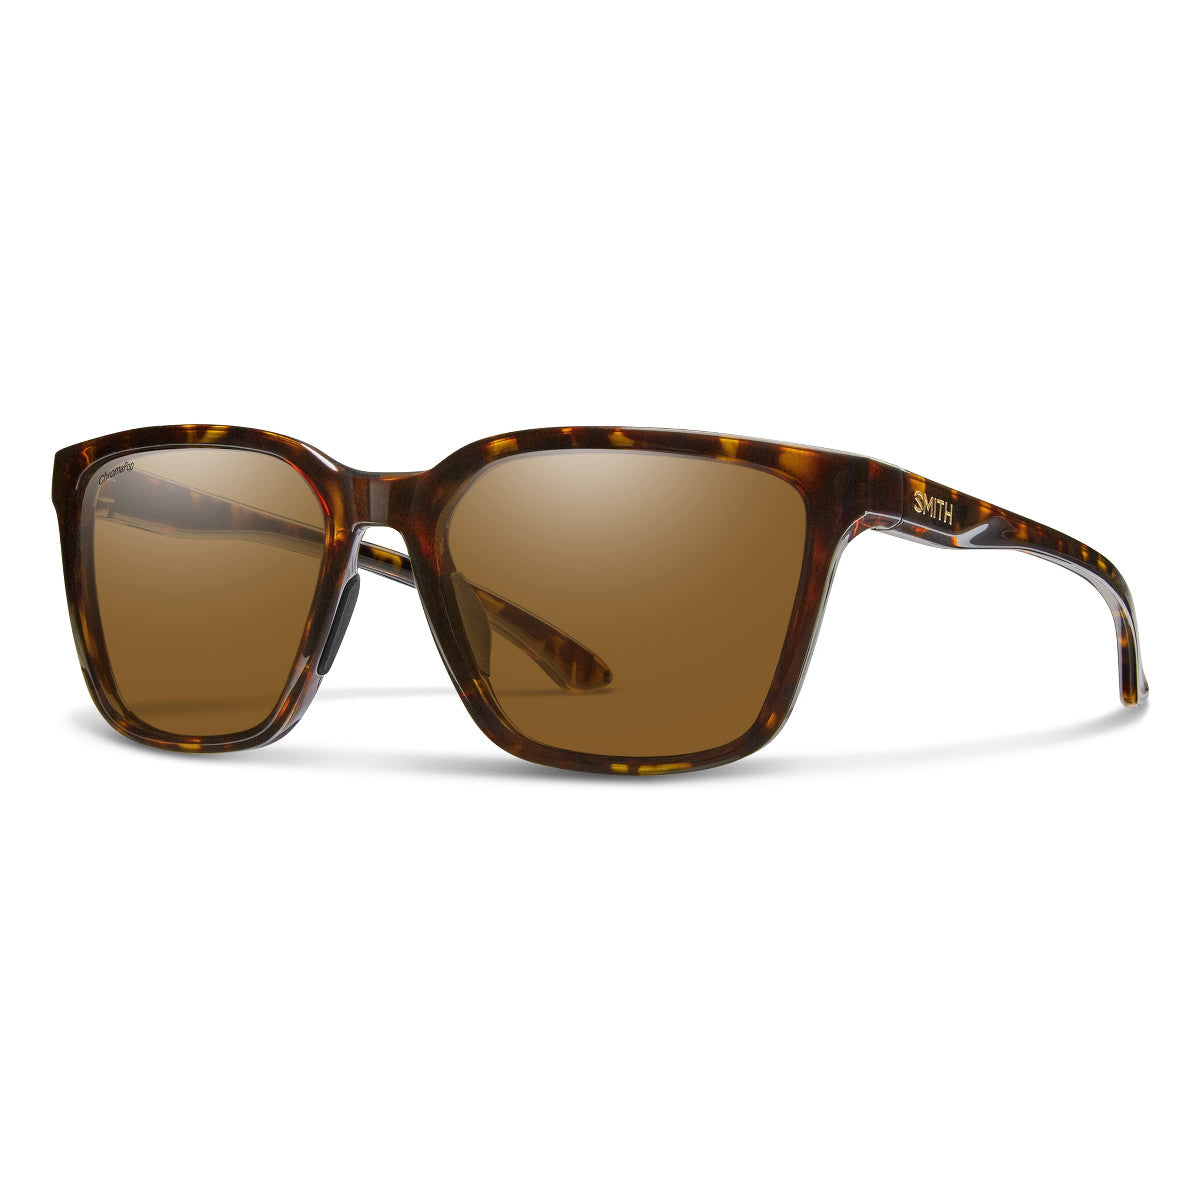 Smith Shoutout Sunglasses Vintage Tortoise Chromapop Glass Polarized Brown Sunglasses